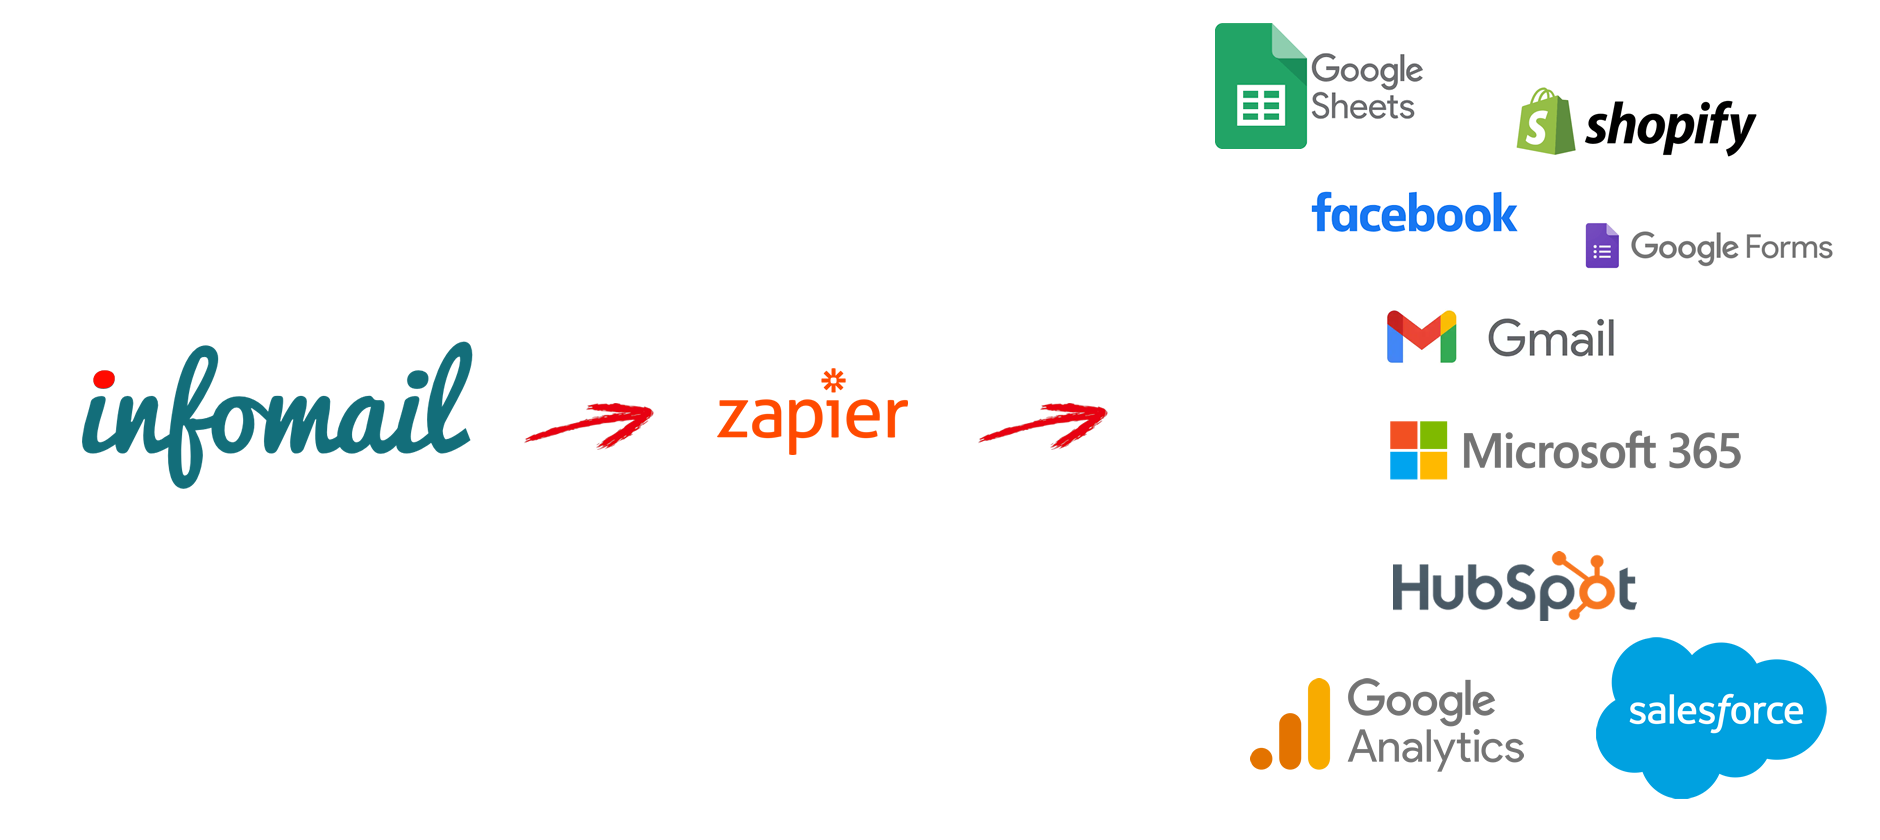 Integra Infomail con Zapier